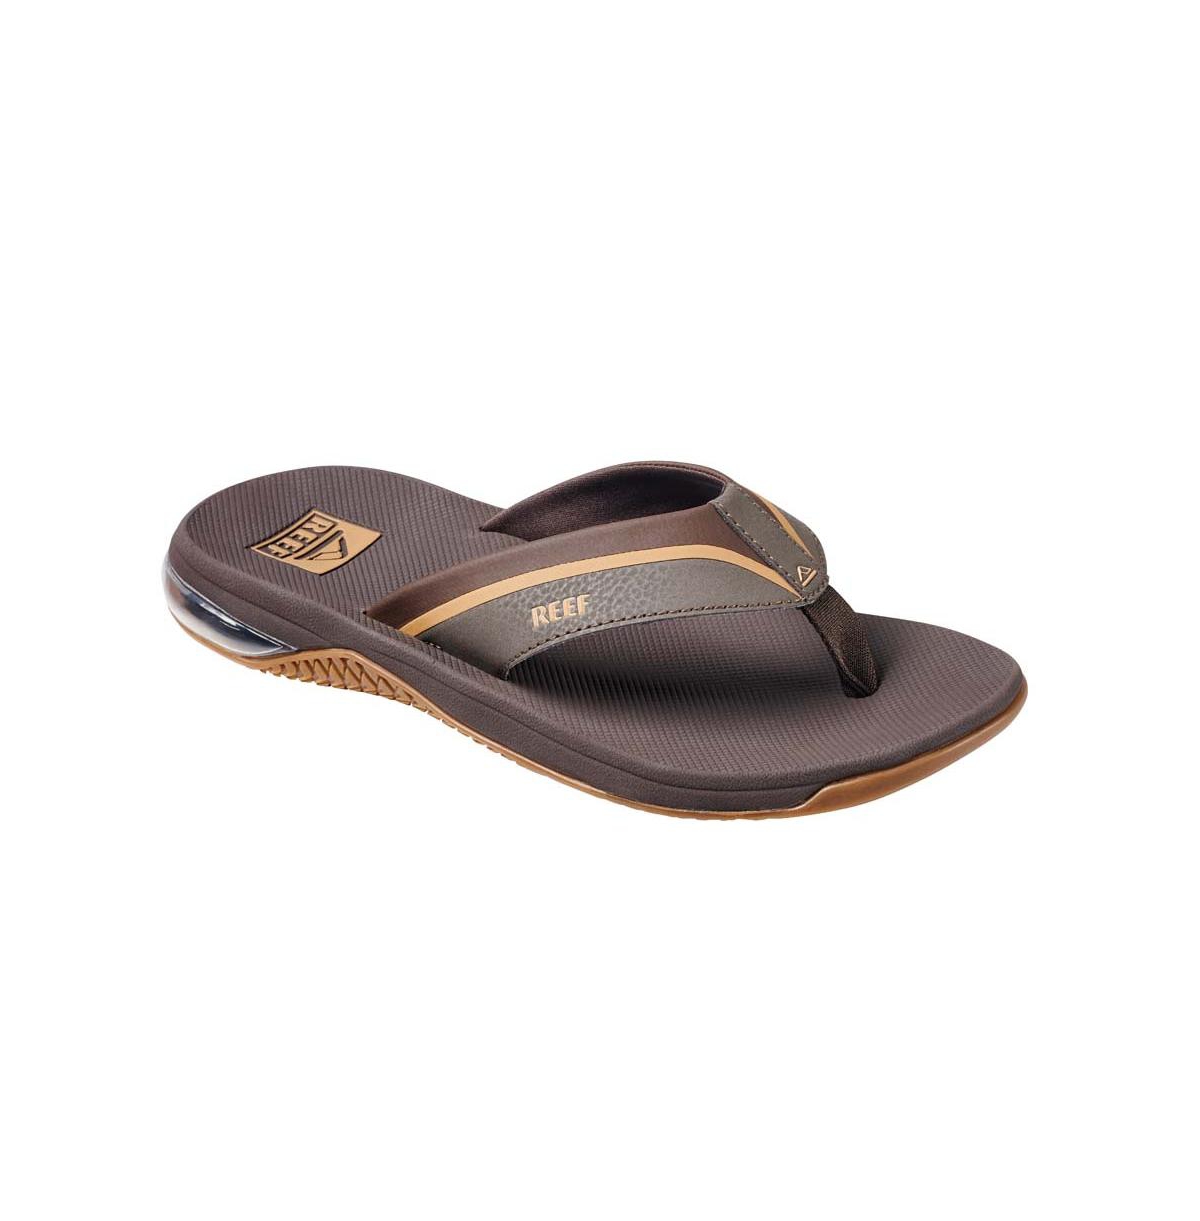 Men's Anchor Comfort Fit Sandals - Brown, Gum